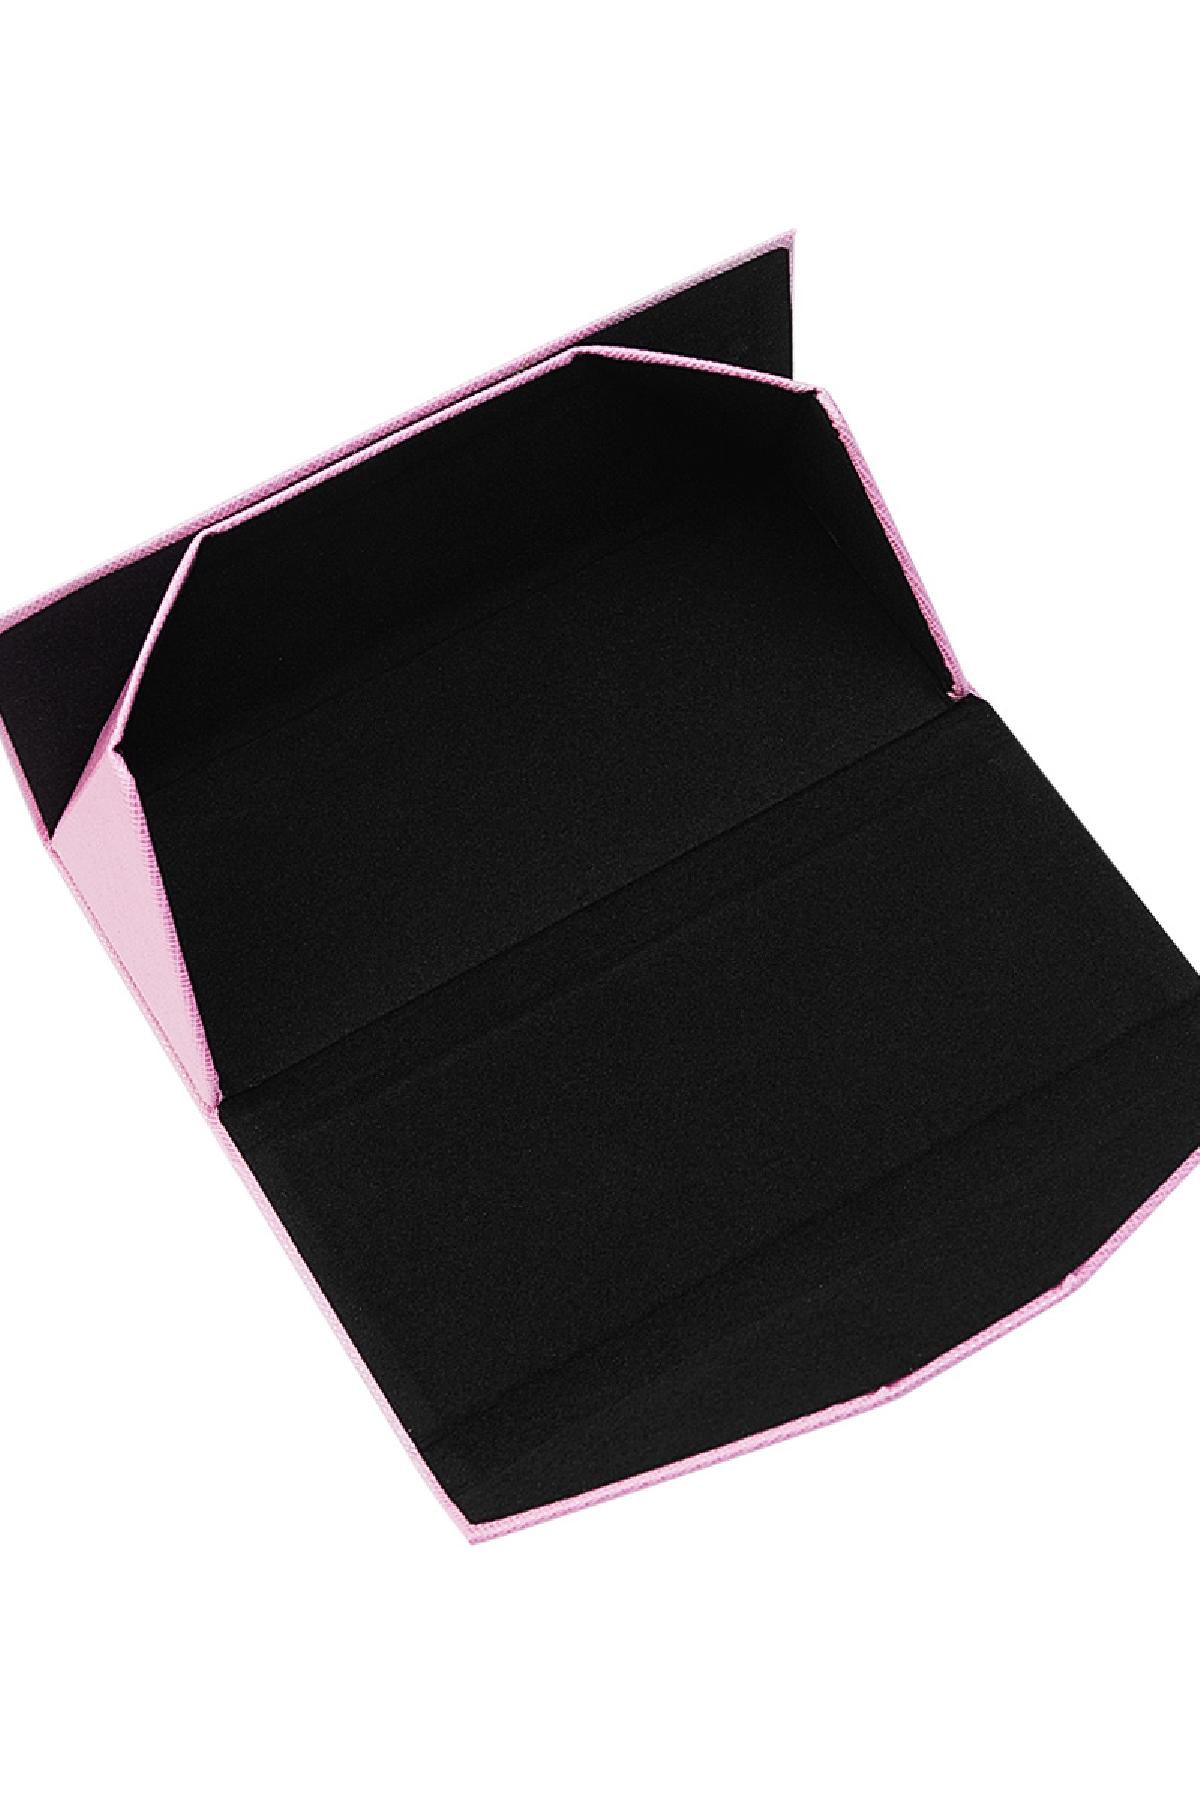 Foldable Triangular Sunglasses Case PU Leather Picture5